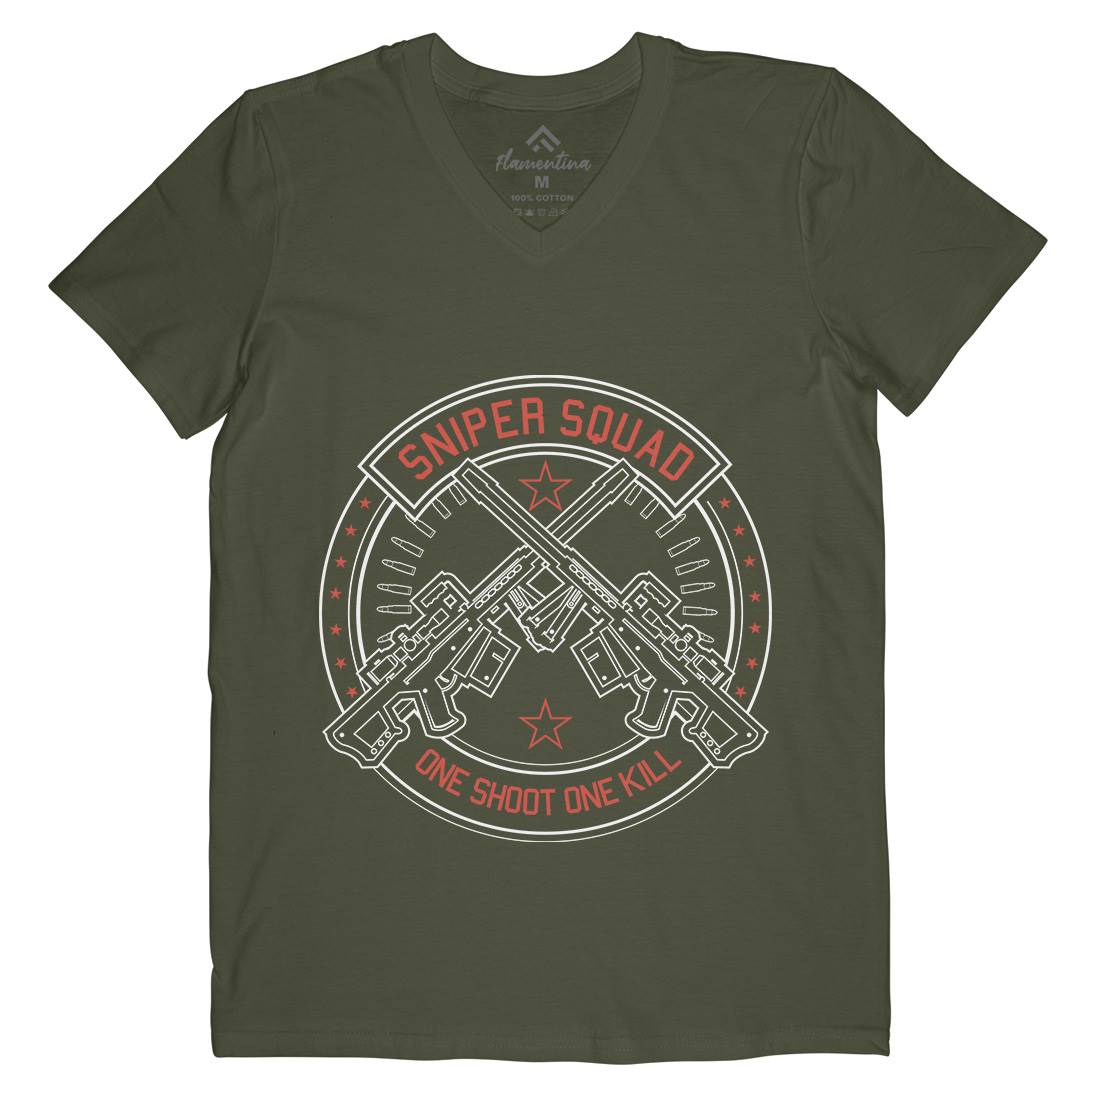 Sniper Squad Mens Organic V-Neck T-Shirt Army A279